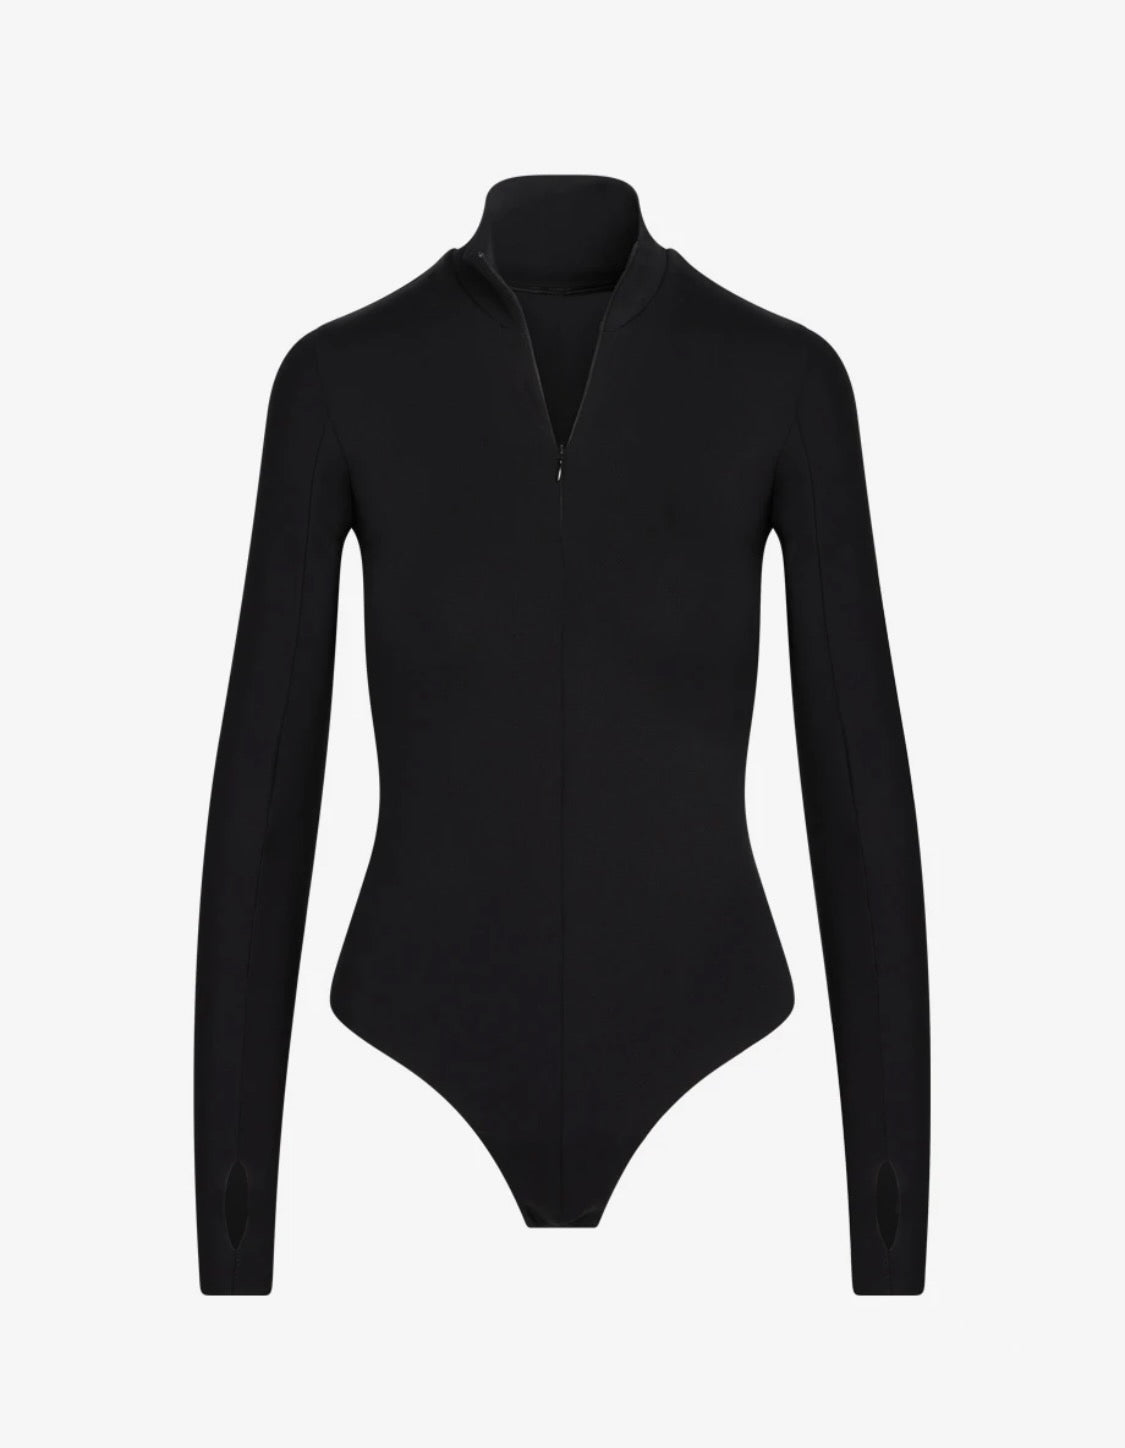 Commando Neoprene Sleeveless Zip-Front Bodysuit - Clothing from   UK